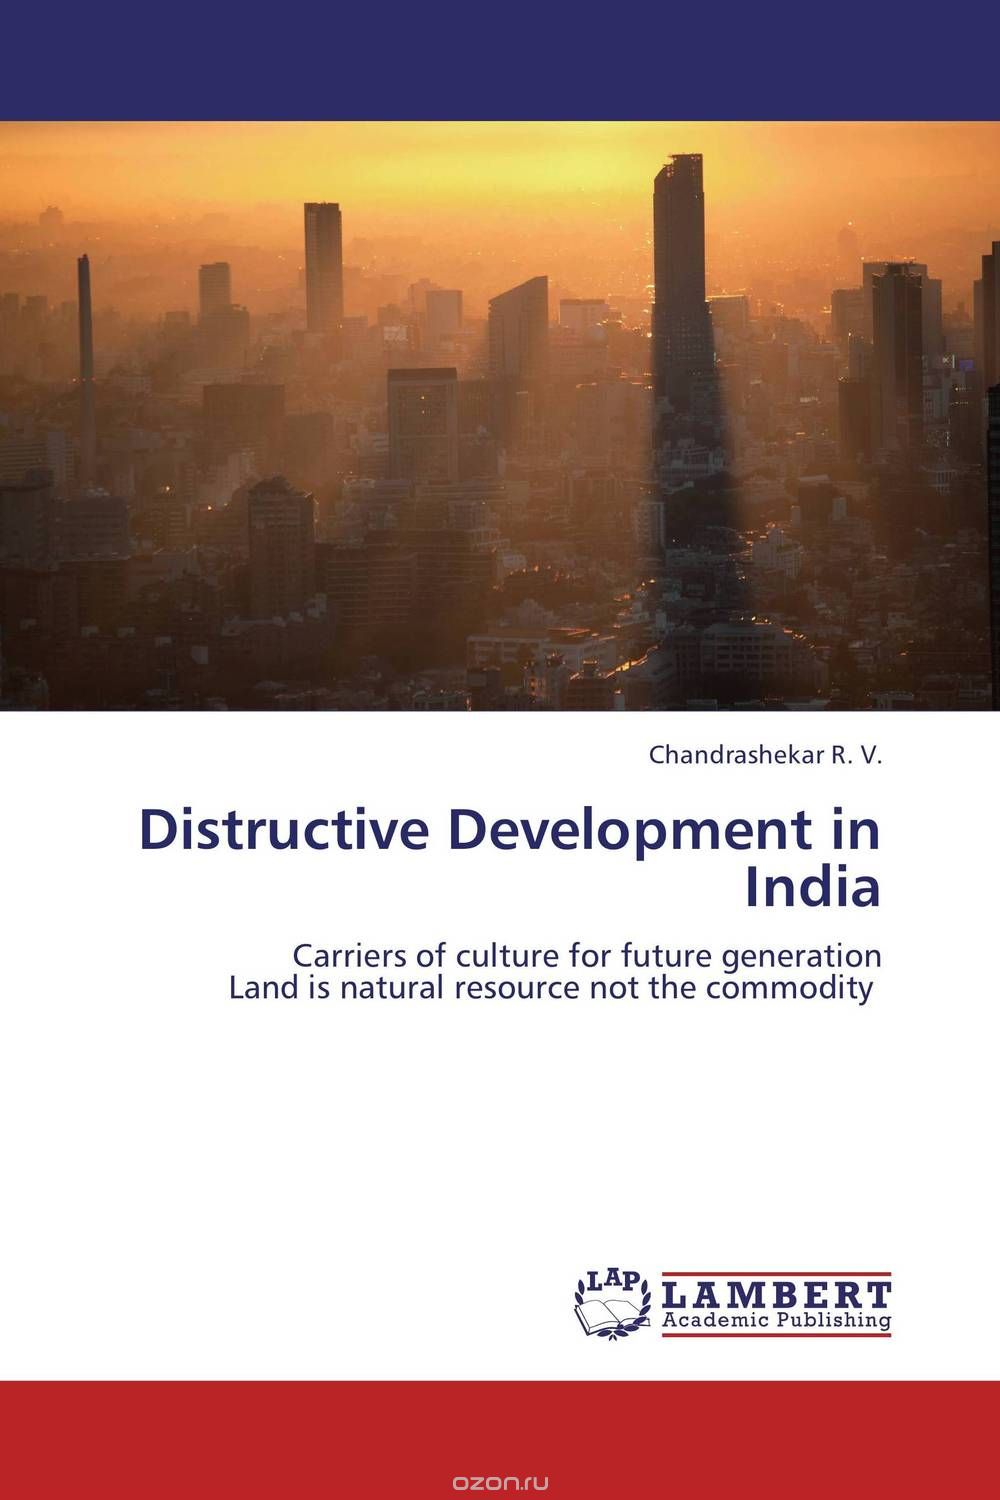 Скачать книгу "Distructive Development in India"